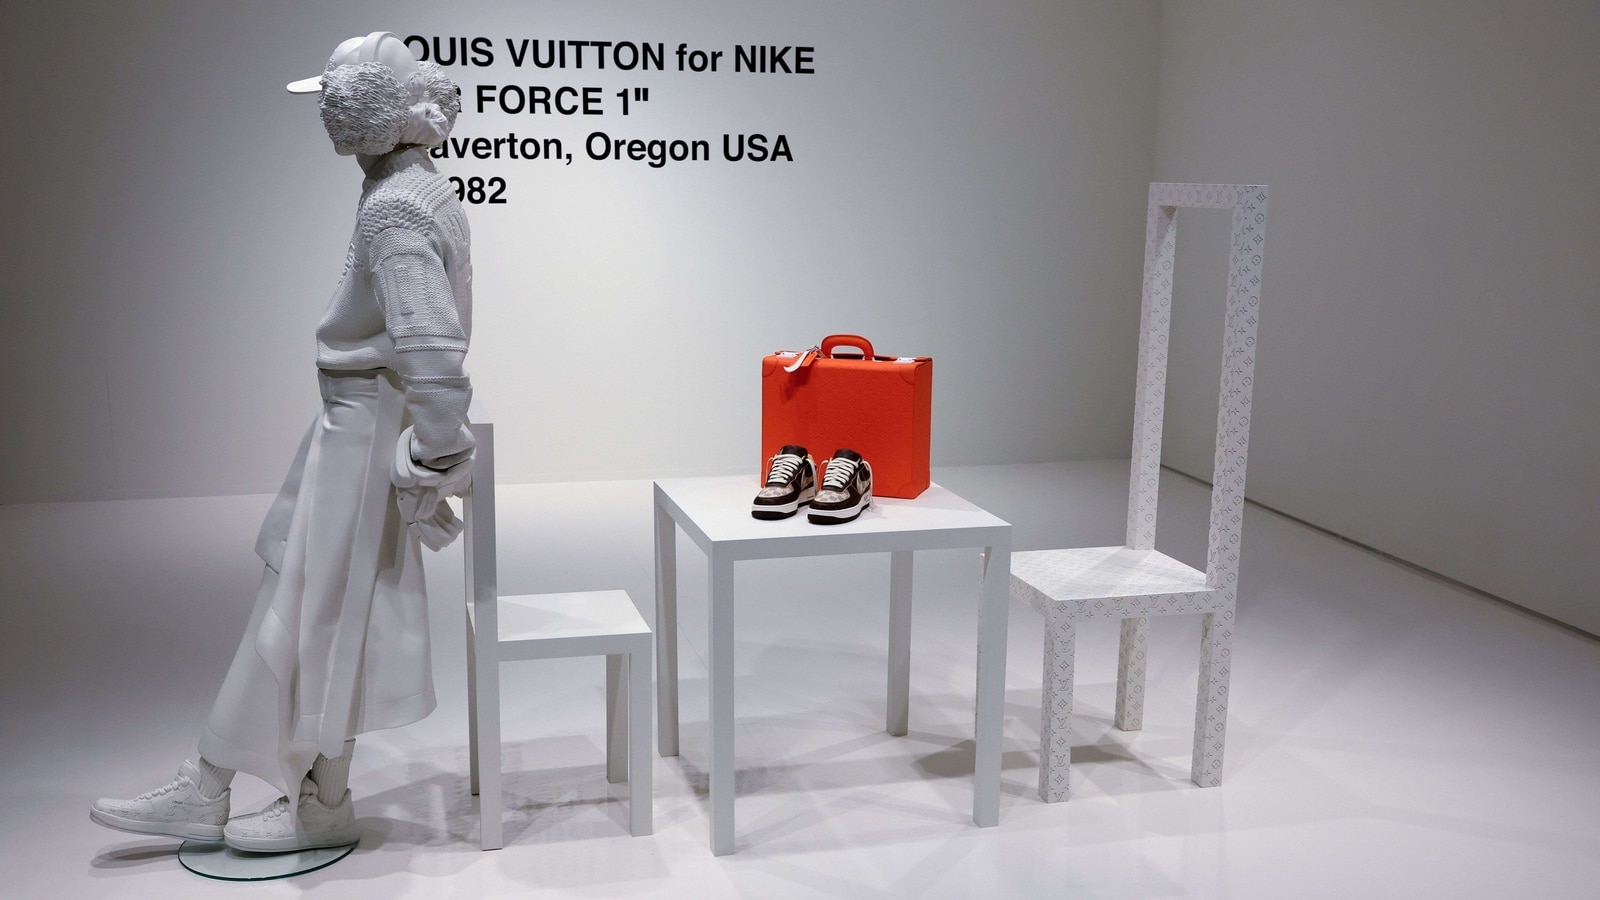 Nike/Louis Vuitton Air Force 1 sneakers by Virgil Abloh beat